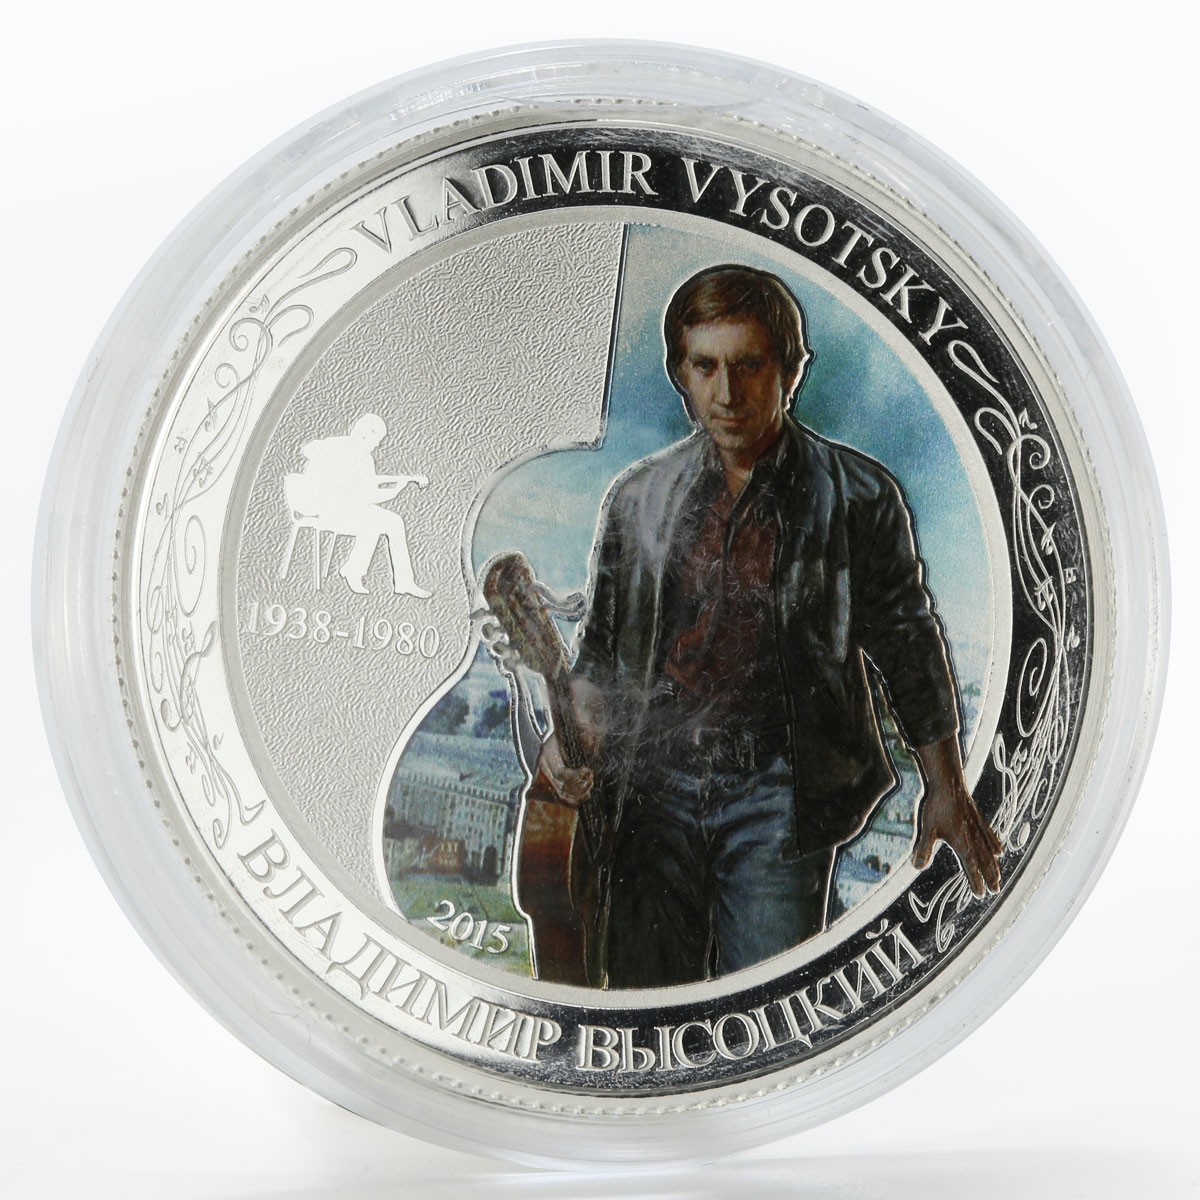 Benin 1000 francs Vladimir Vysotsky composer colored silver coin 2015